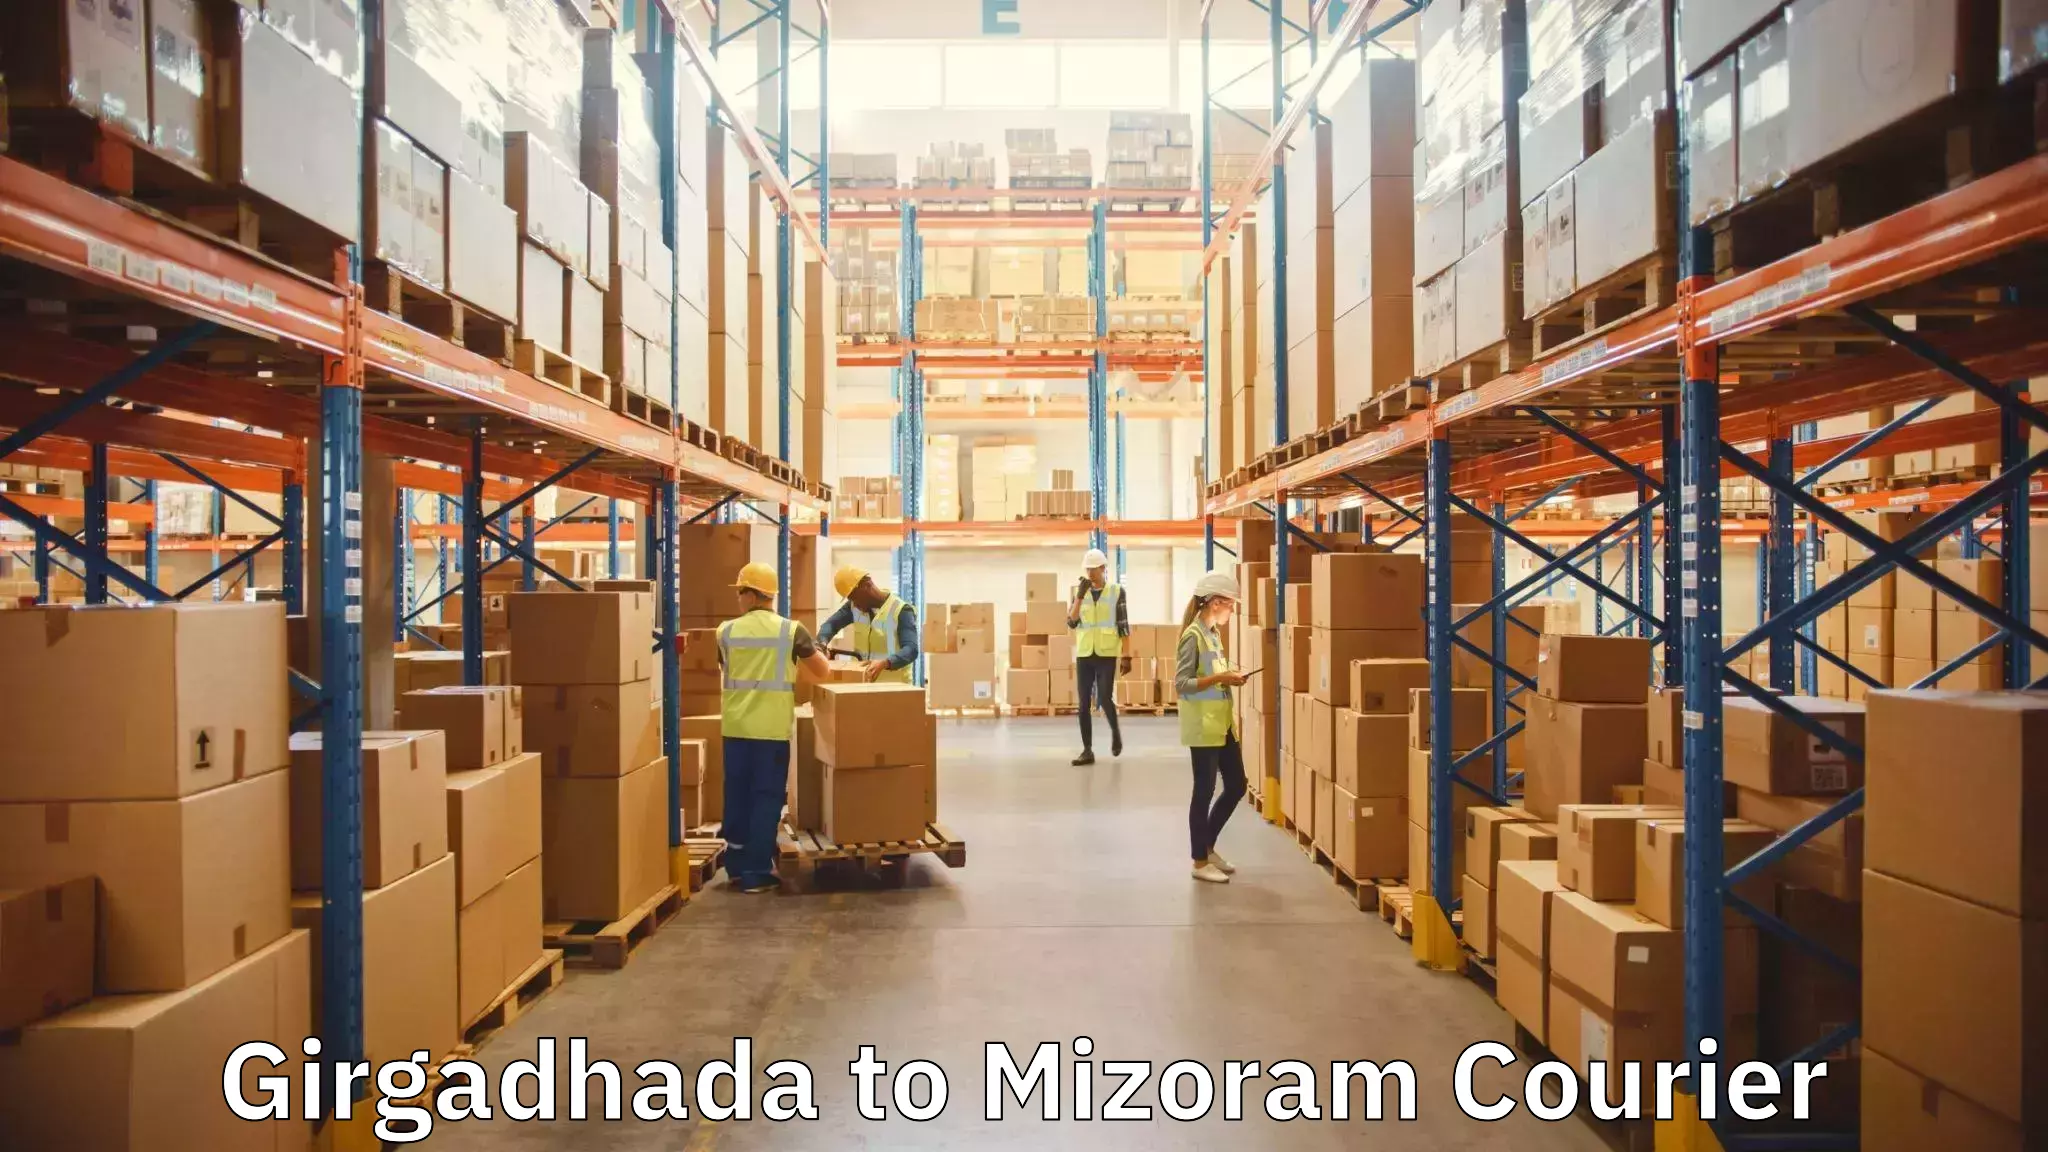 Trusted moving company Girgadhada to Mizoram